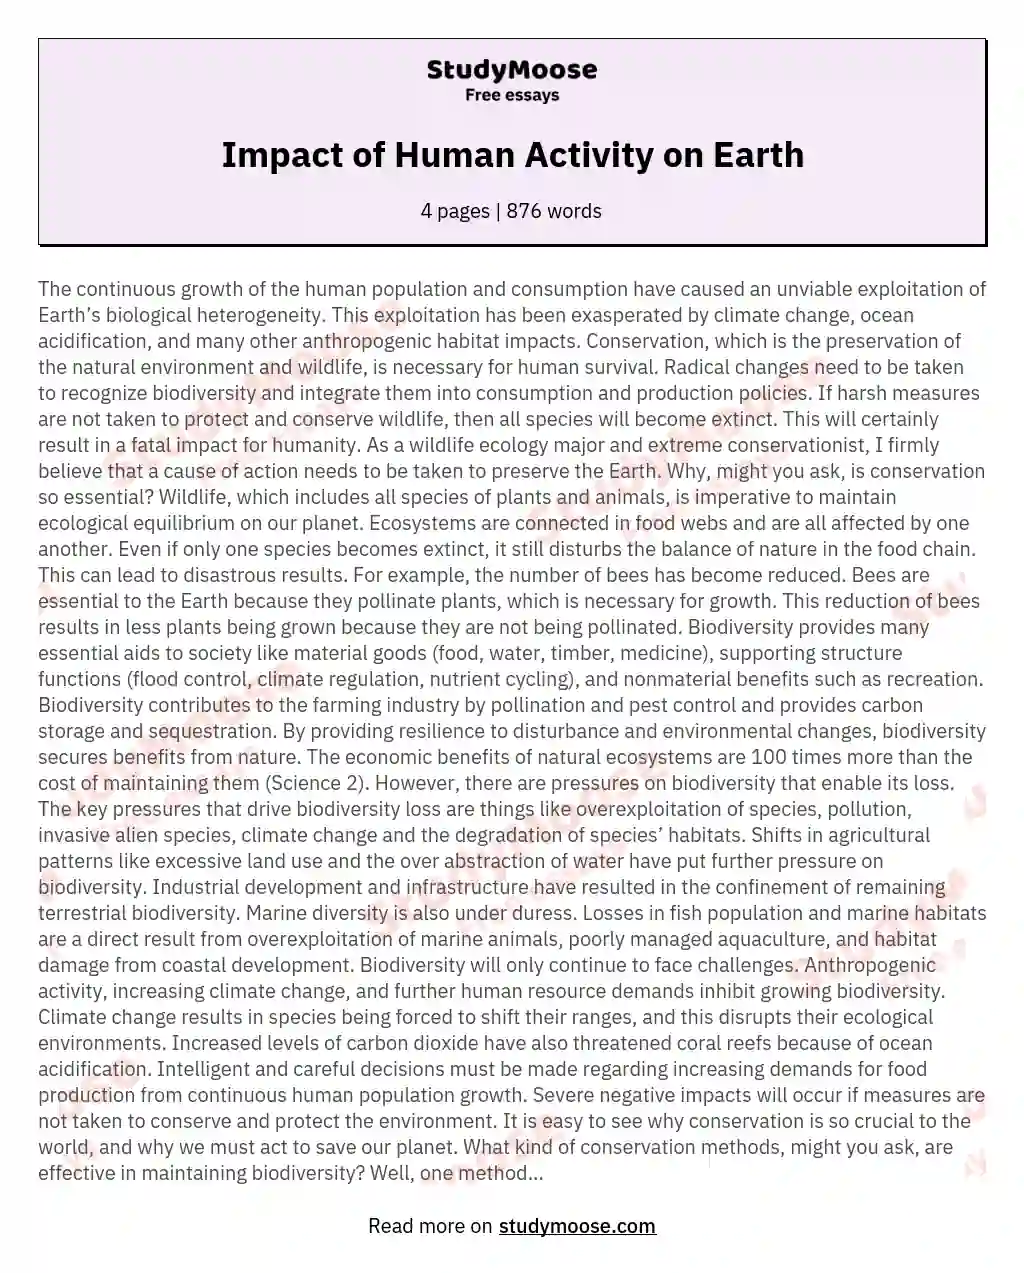 Impact of Human Activity on Earth essay